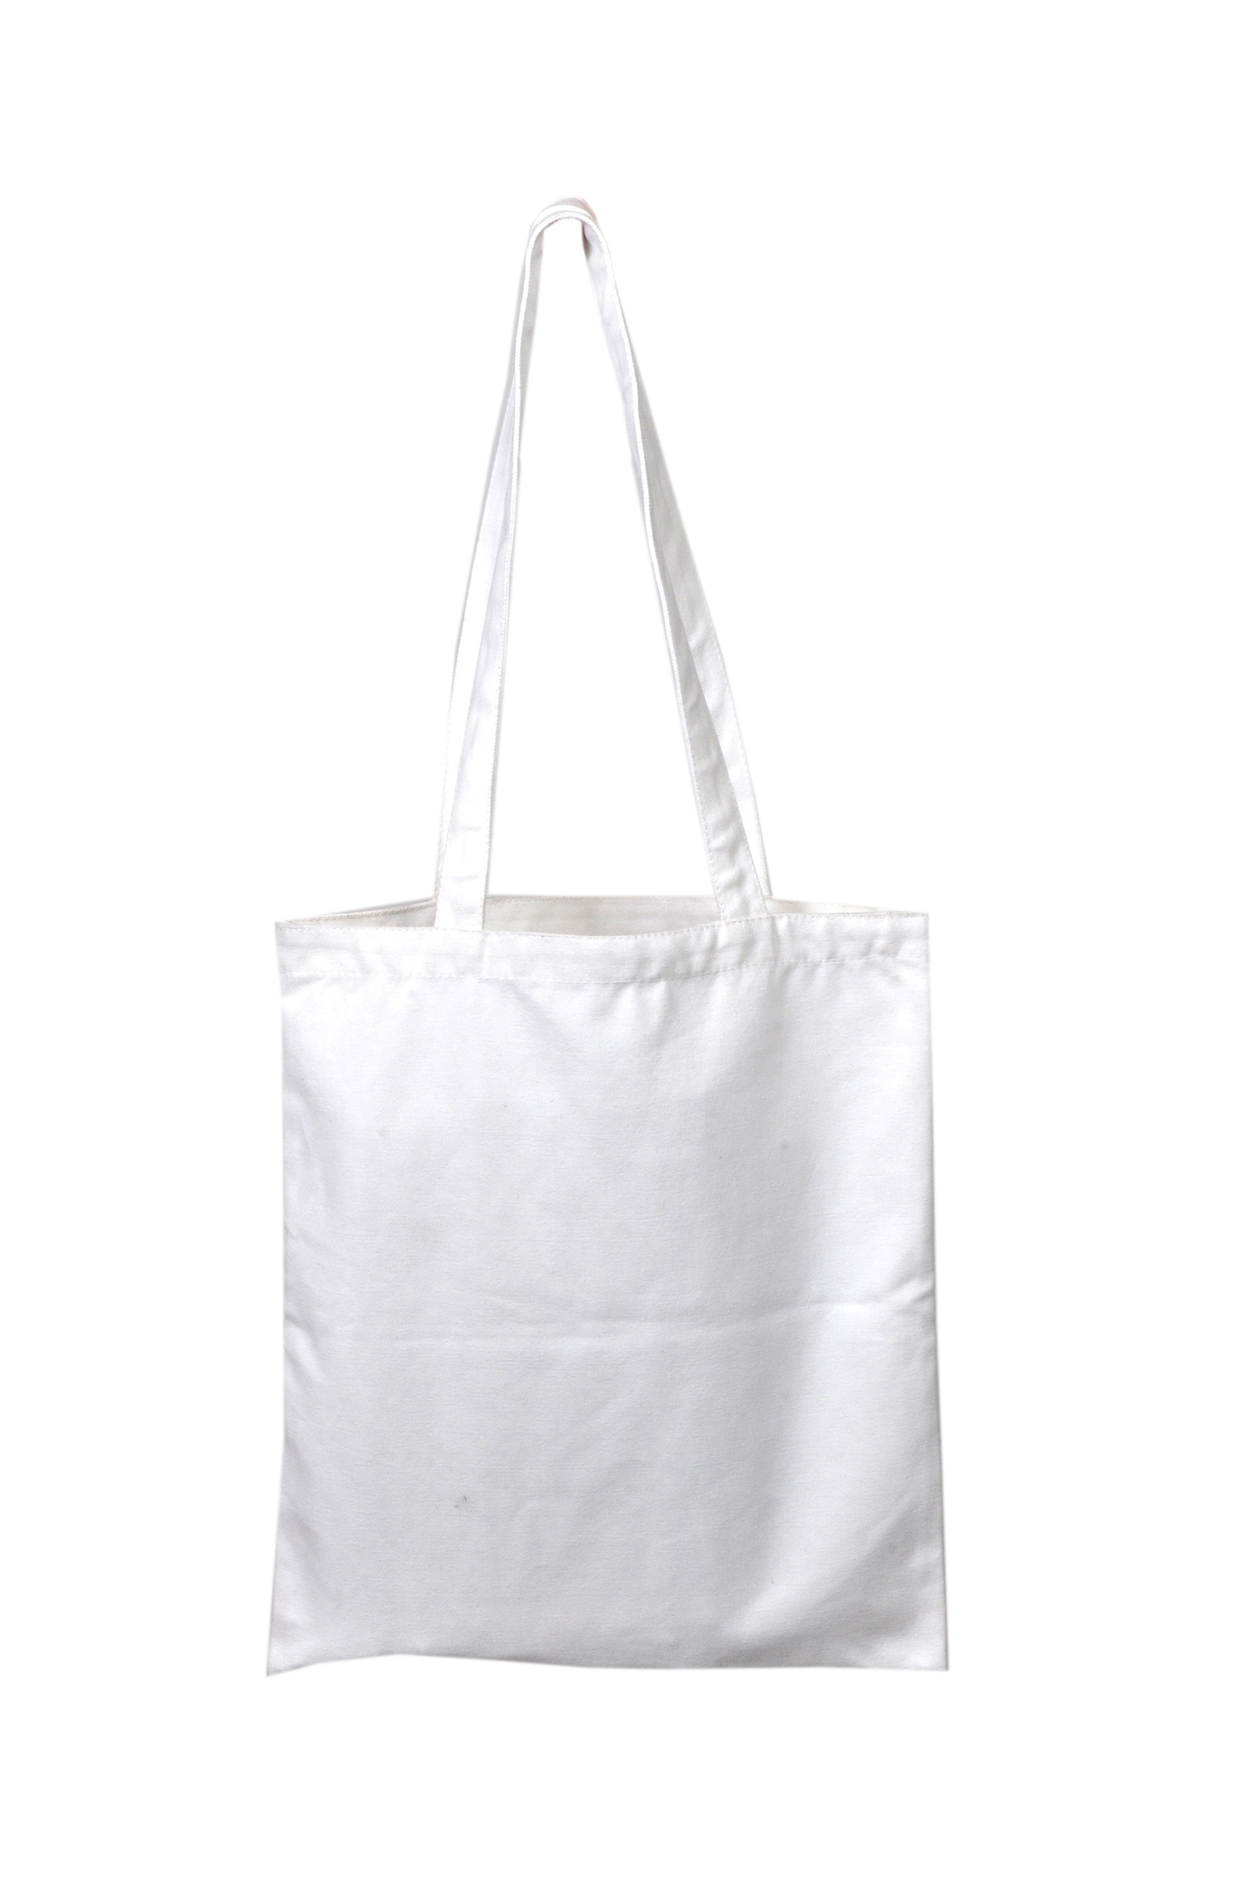 Plain Canvas Bag easy to carry bag for 